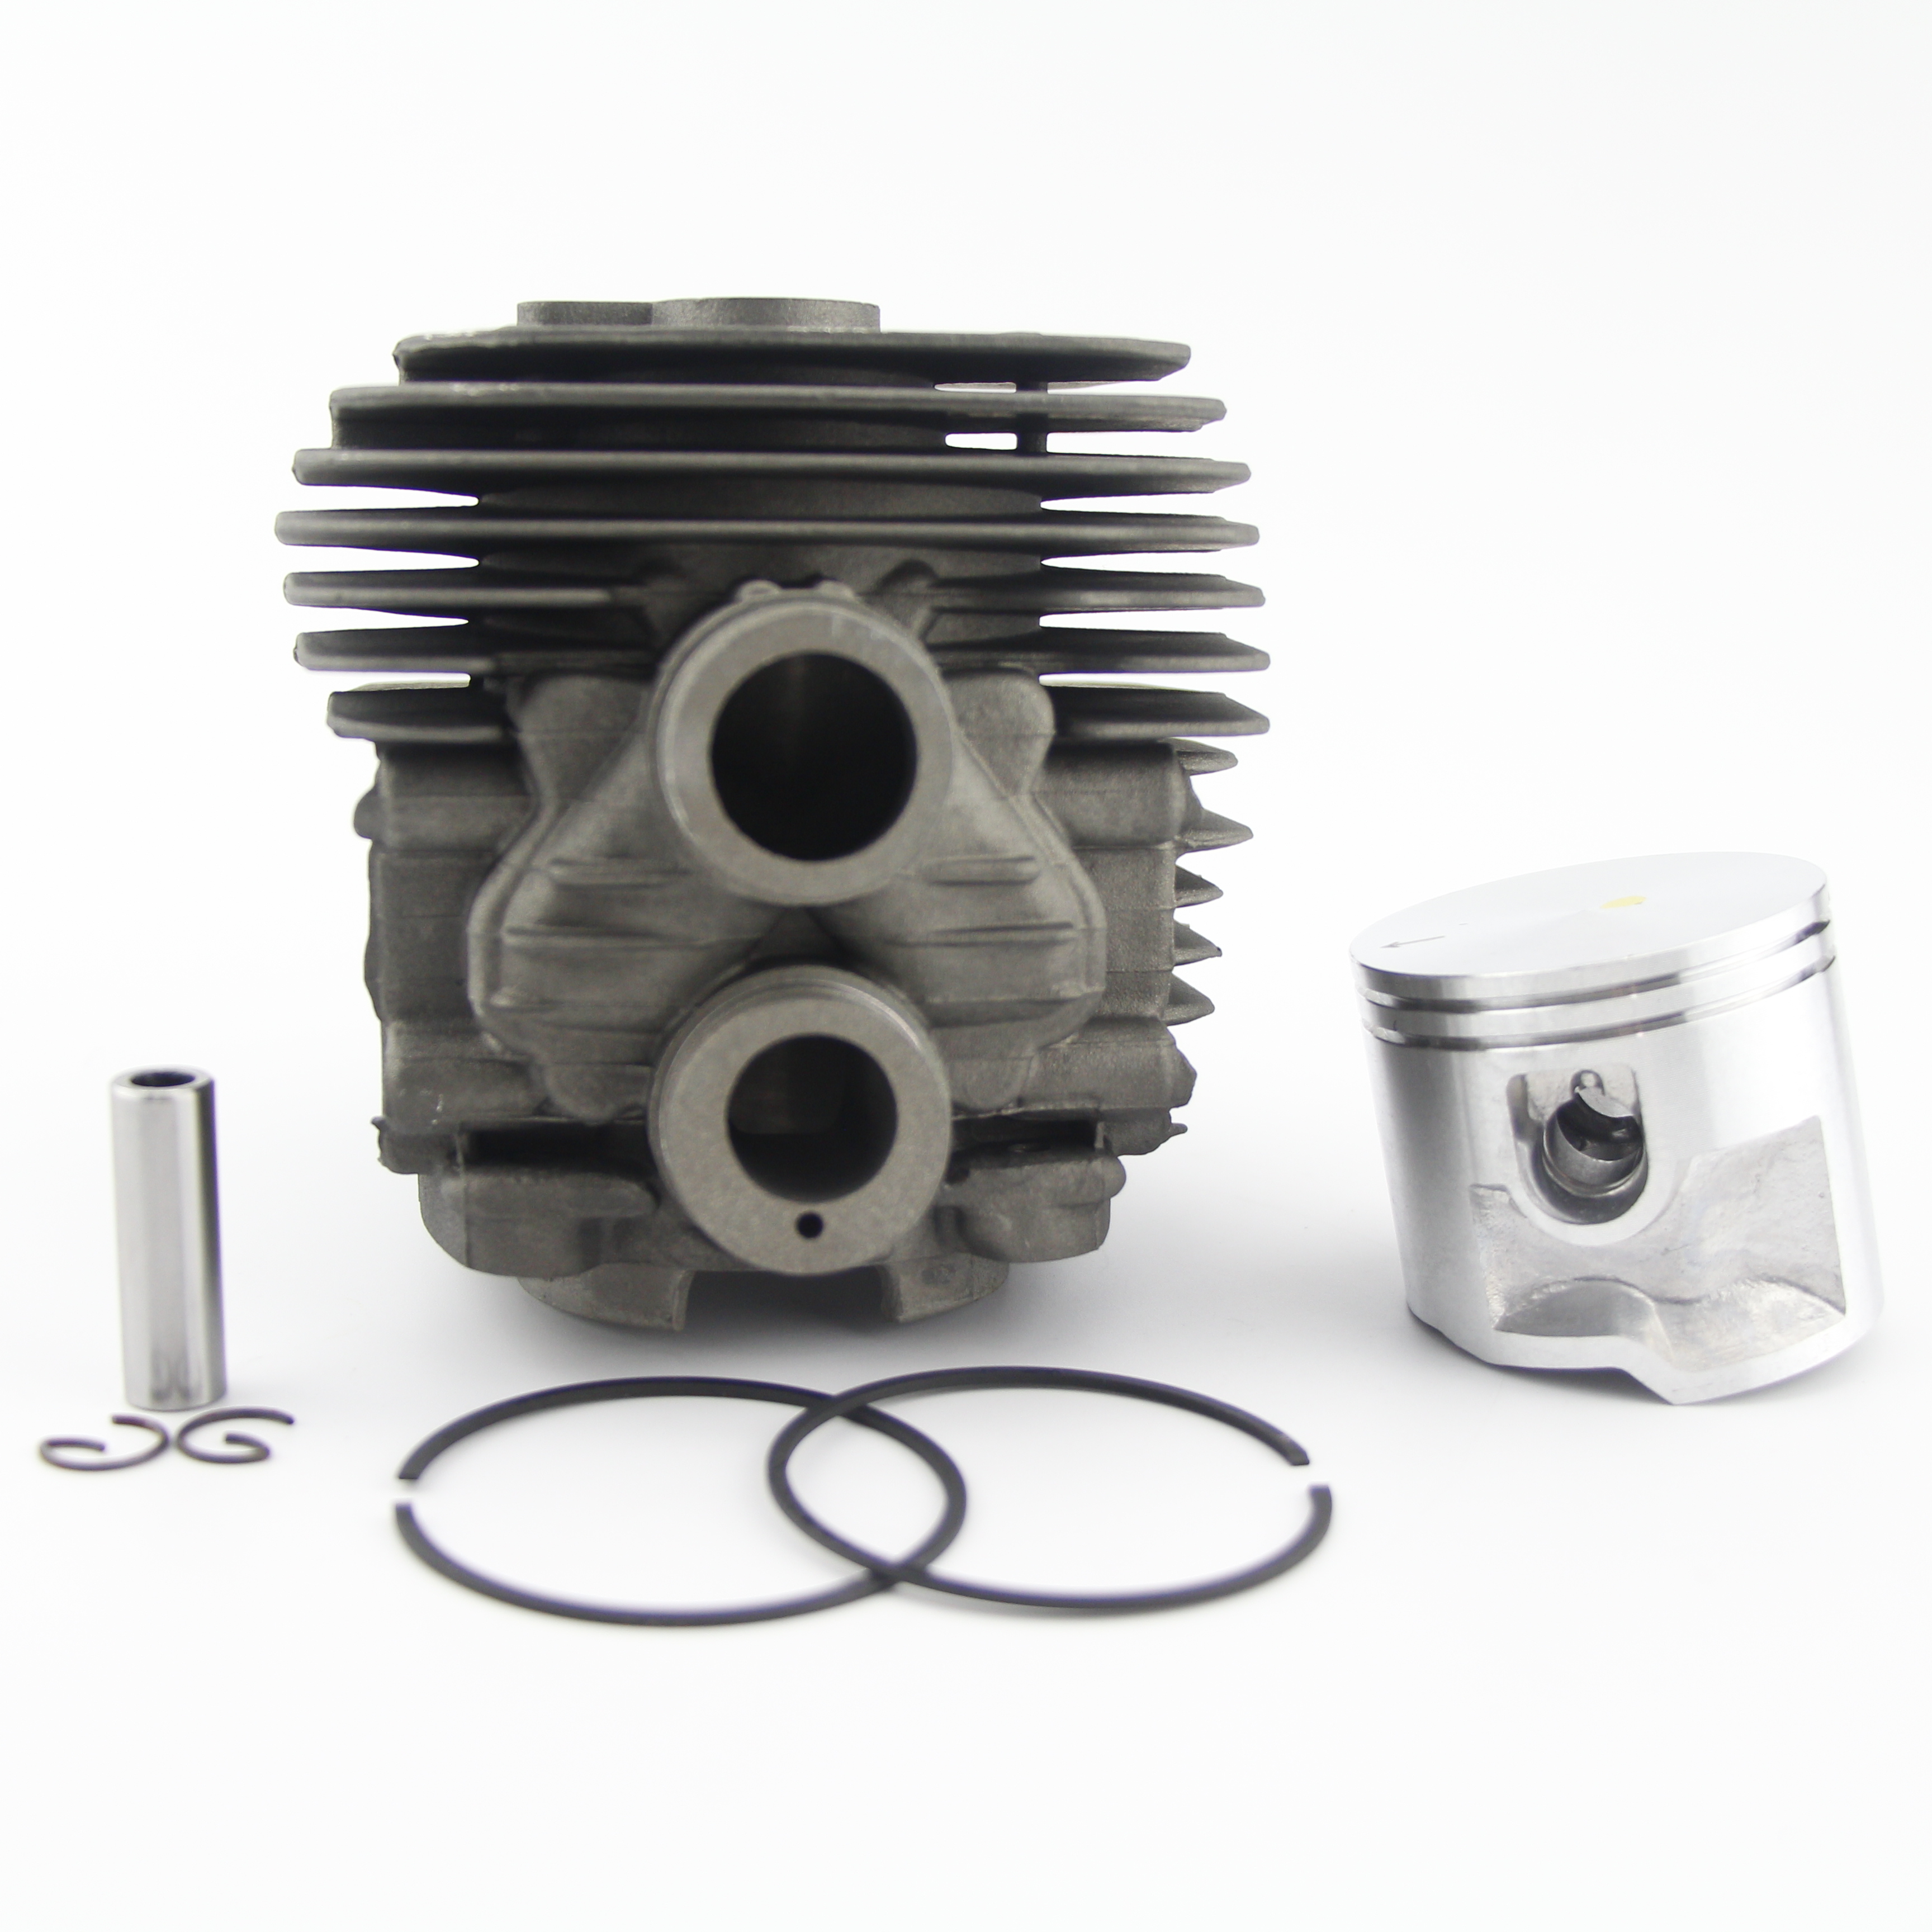 50mm Cylinder Piston Gaskets Kit For Stihl TS410 TS420 TS 410 420 Cut-Off Saw 